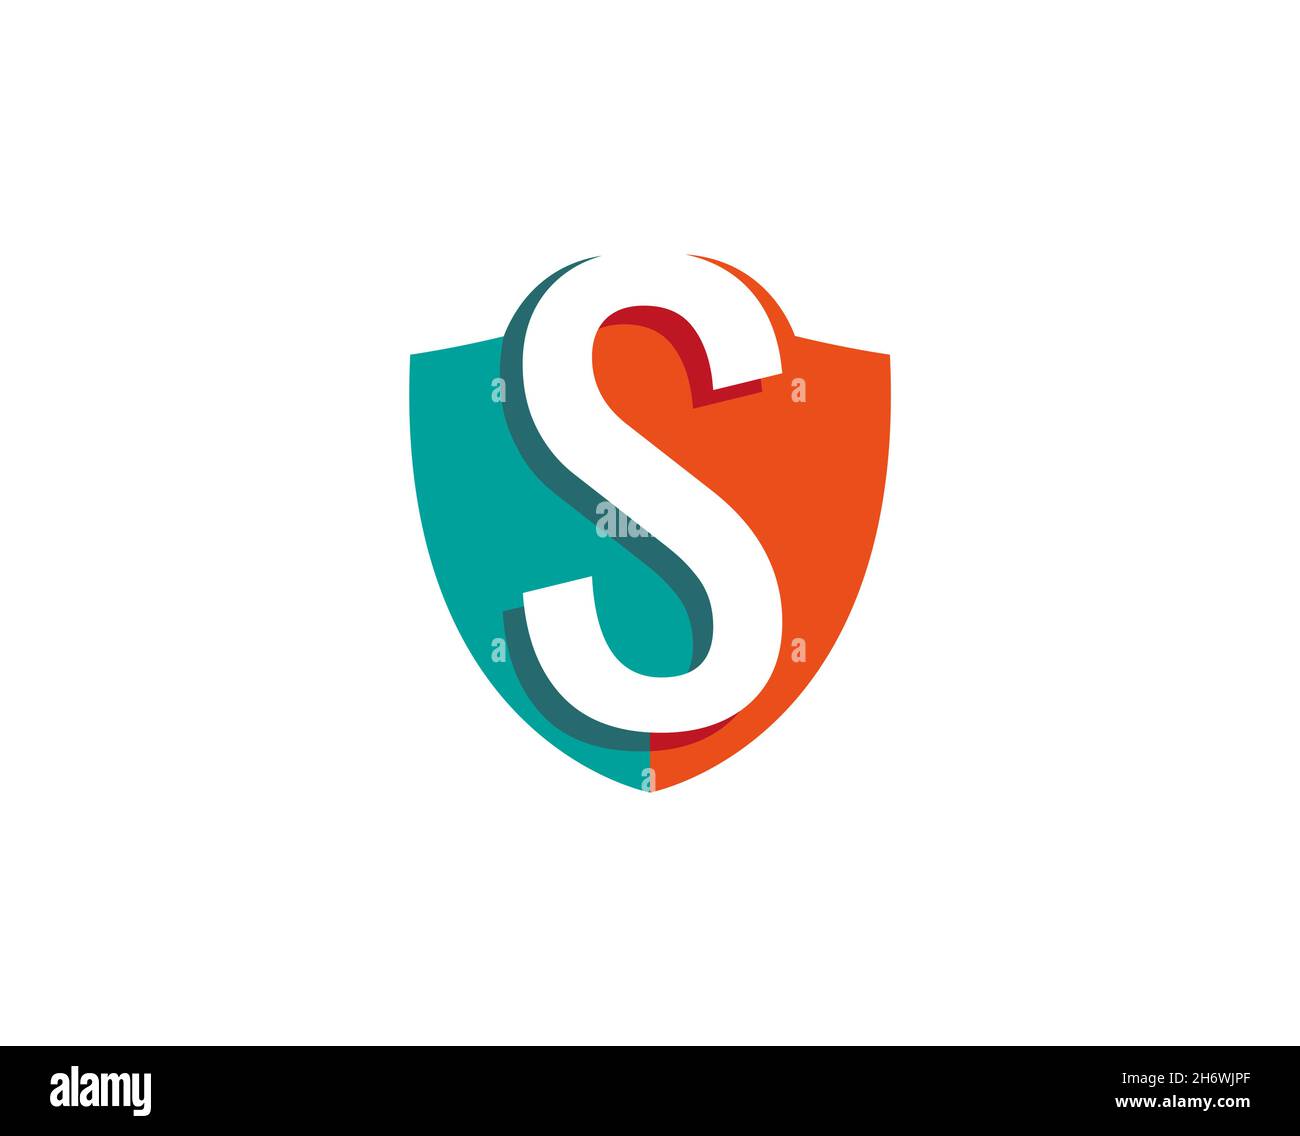 Abbildung des Creative Shield S Letter-Logos Vektorsymbols Stock Vektor